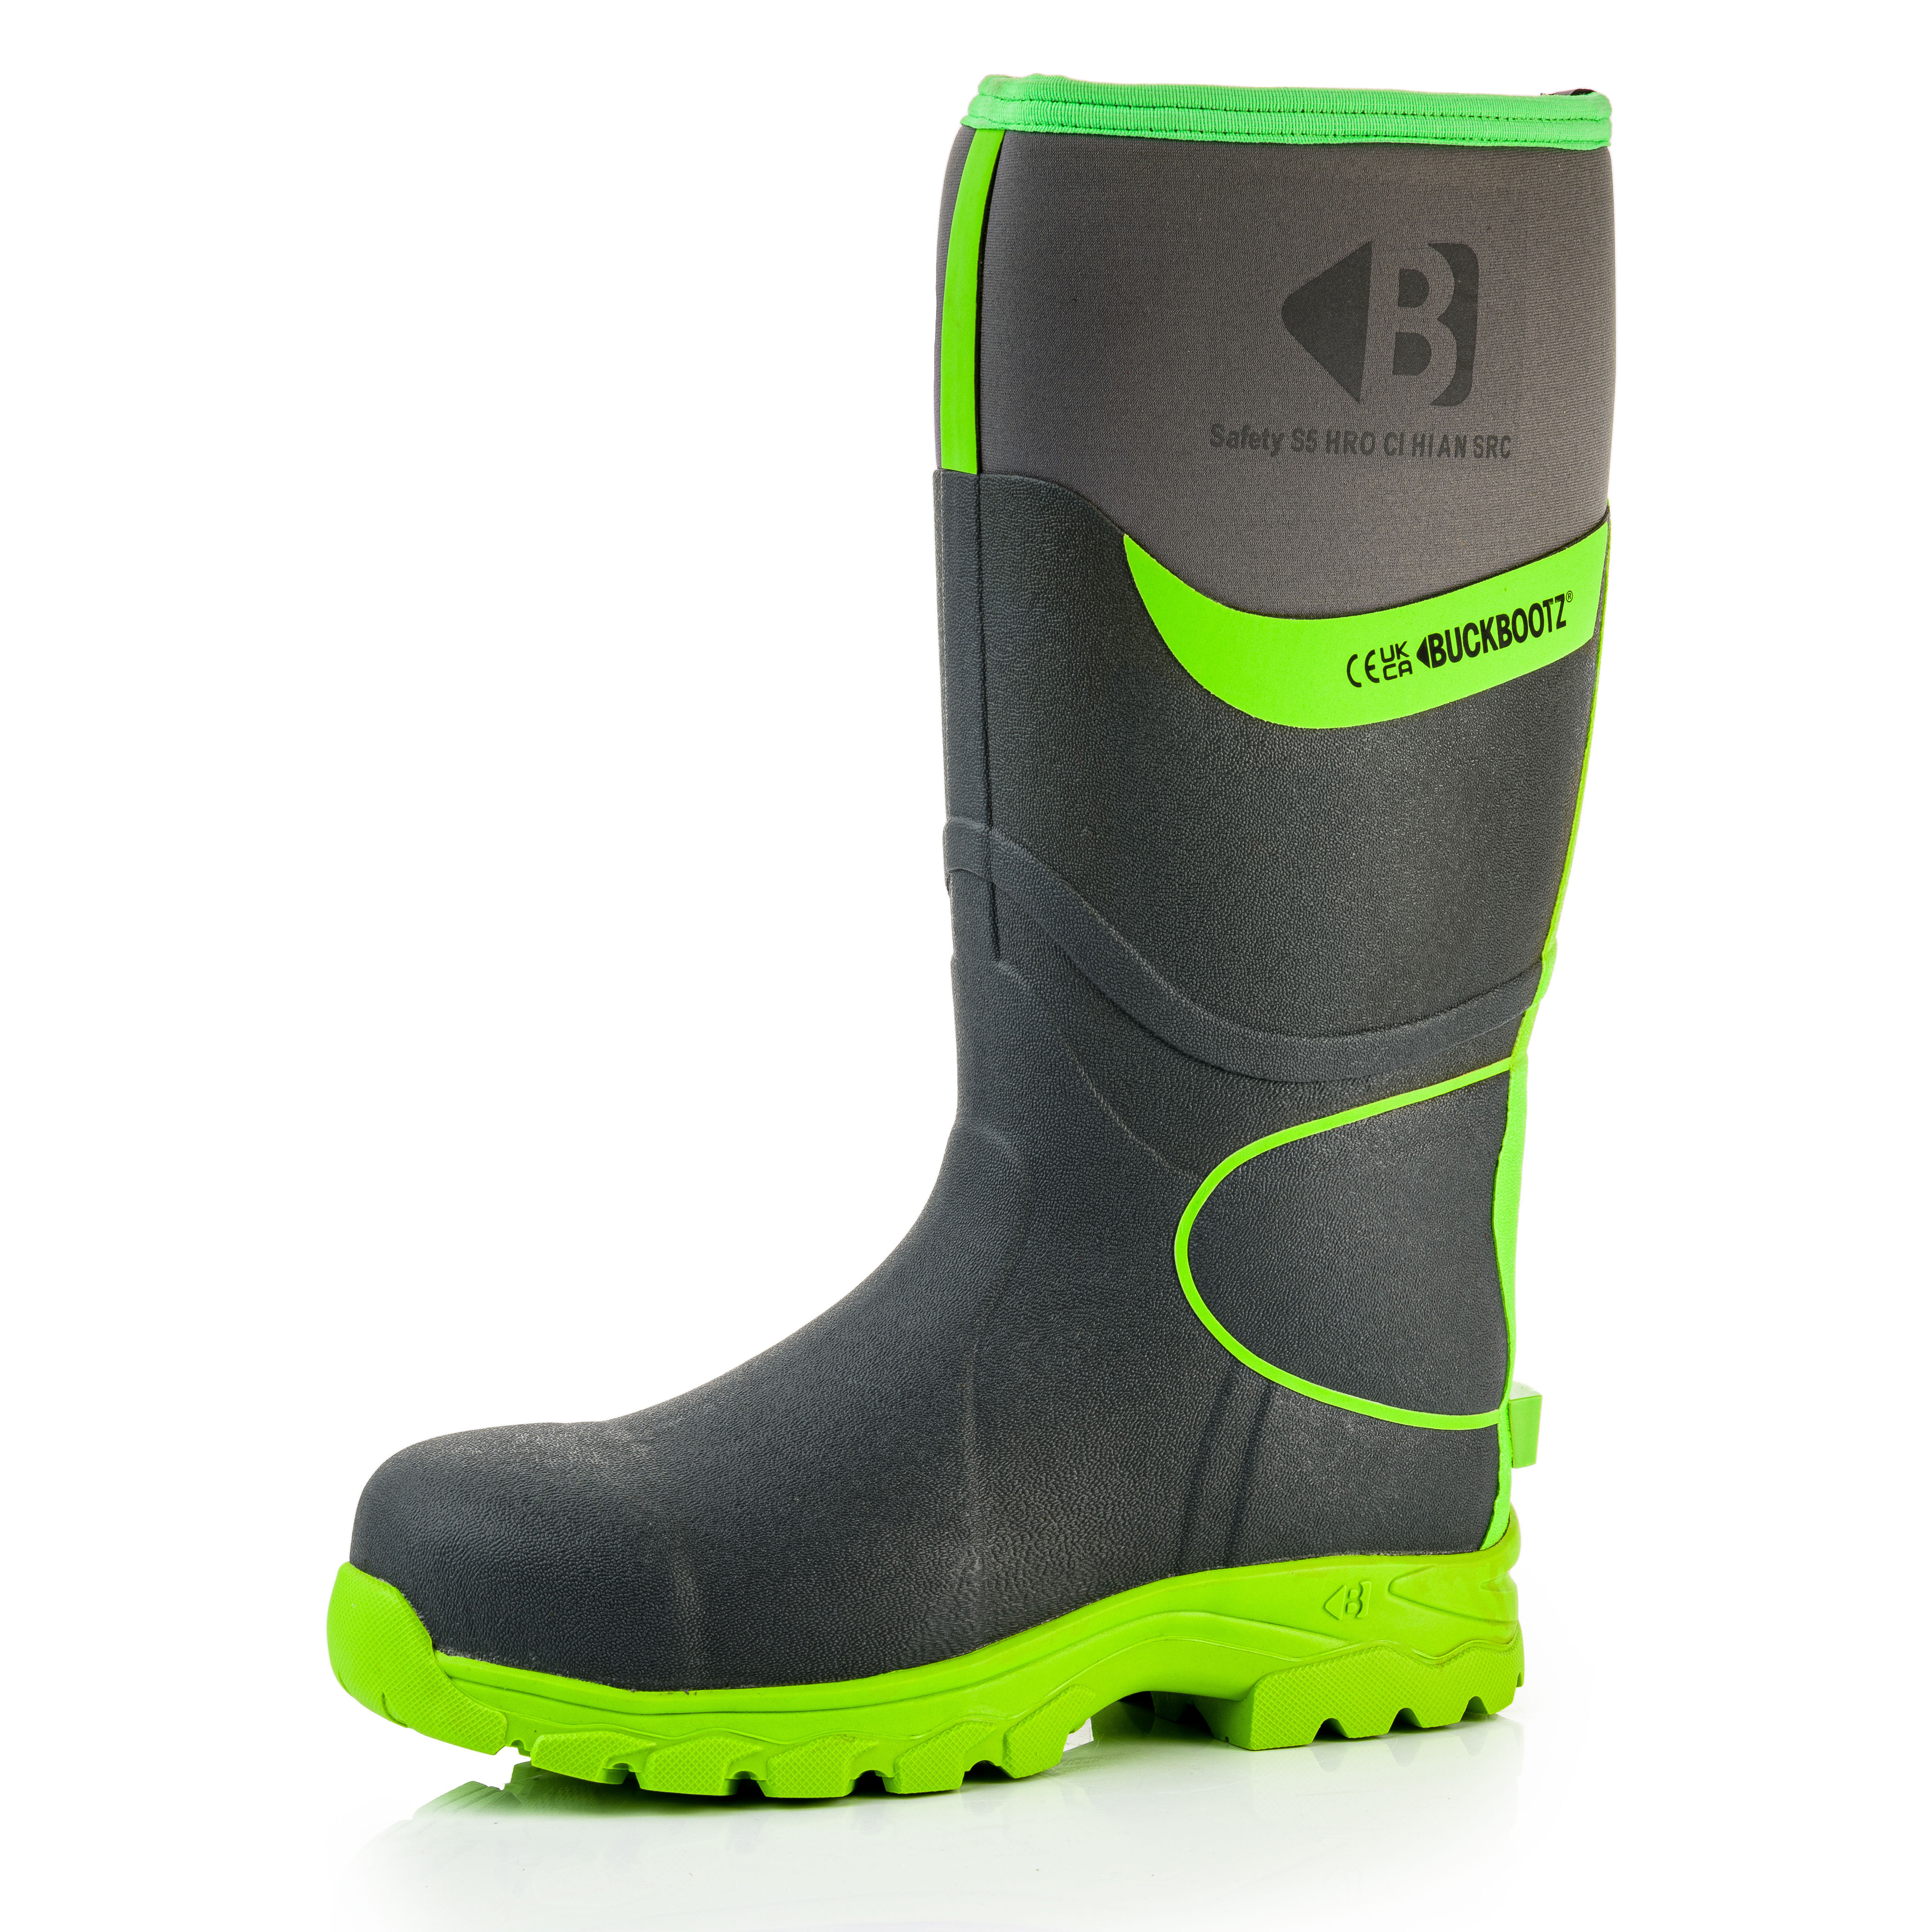 Buckbootz Hi-Vis Wellington Safety Boots Grey/Green - BBZ8000GYGR